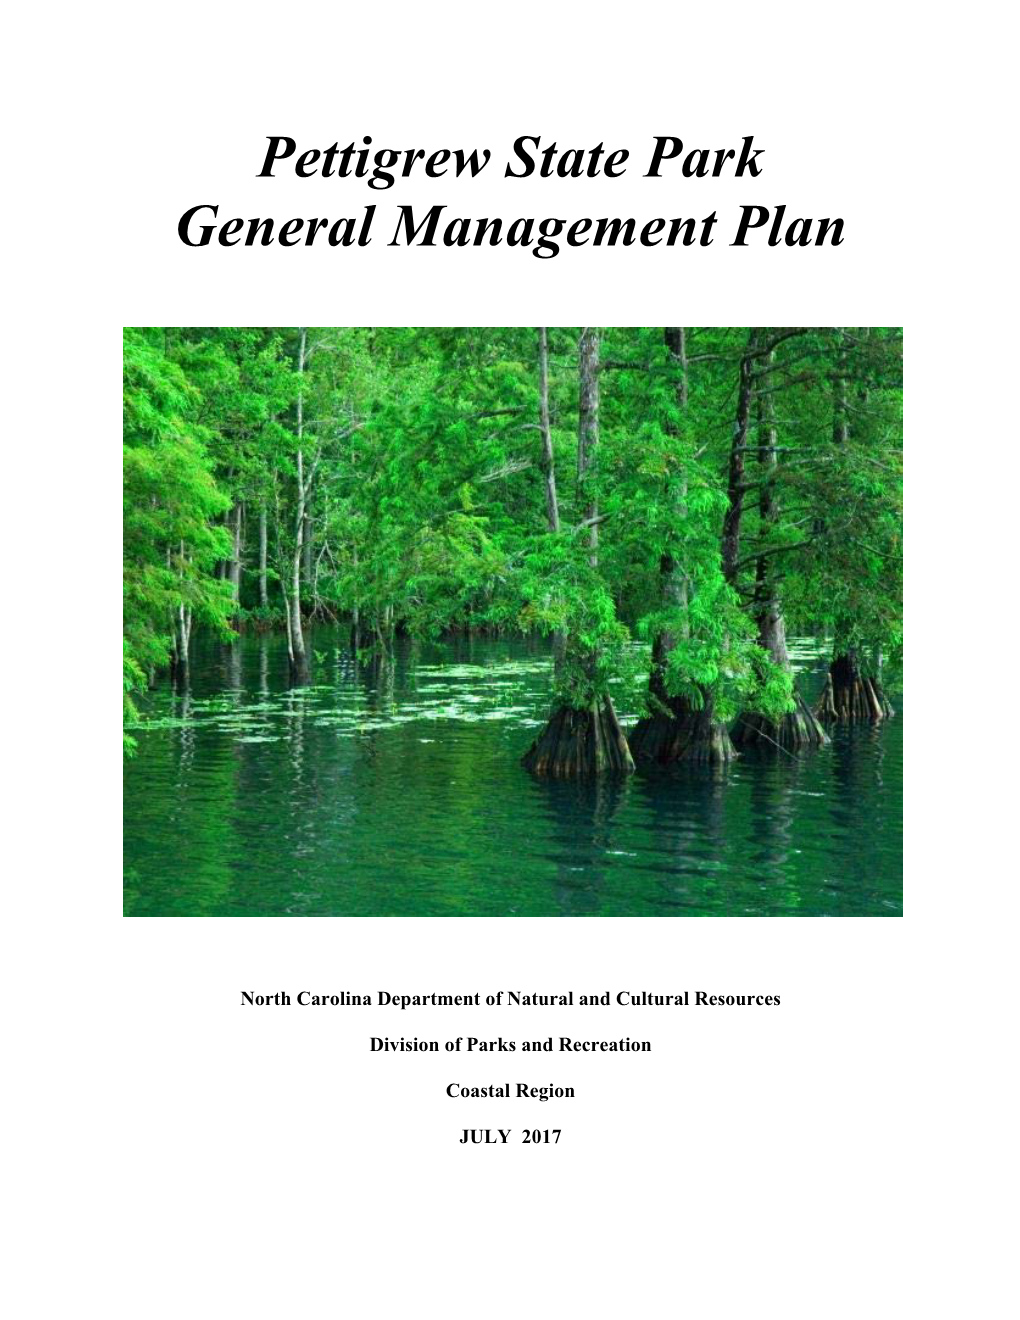 Pettigrew State Park General Management Plan